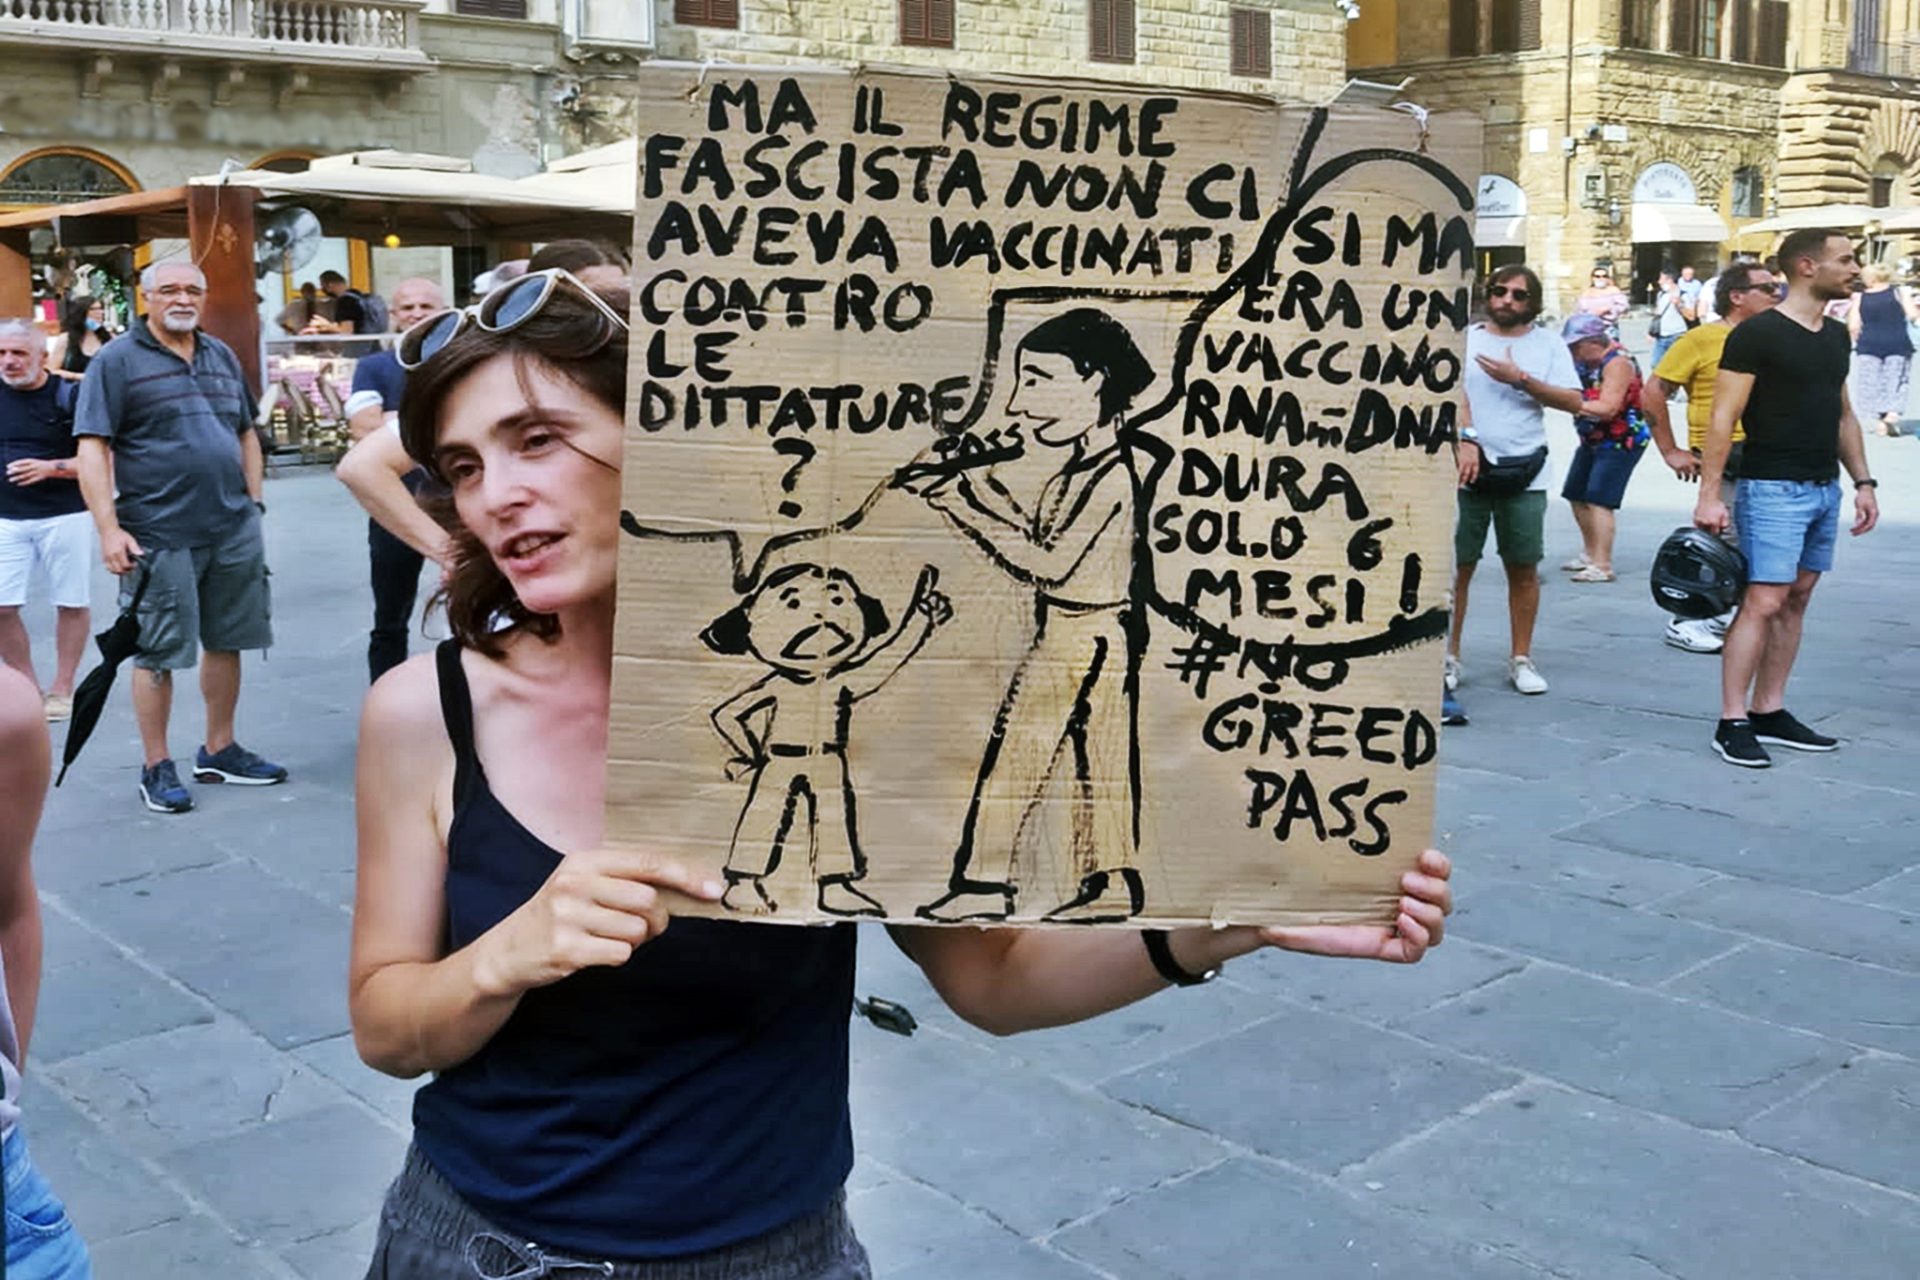 Firenze: manifestazione contro Green pass